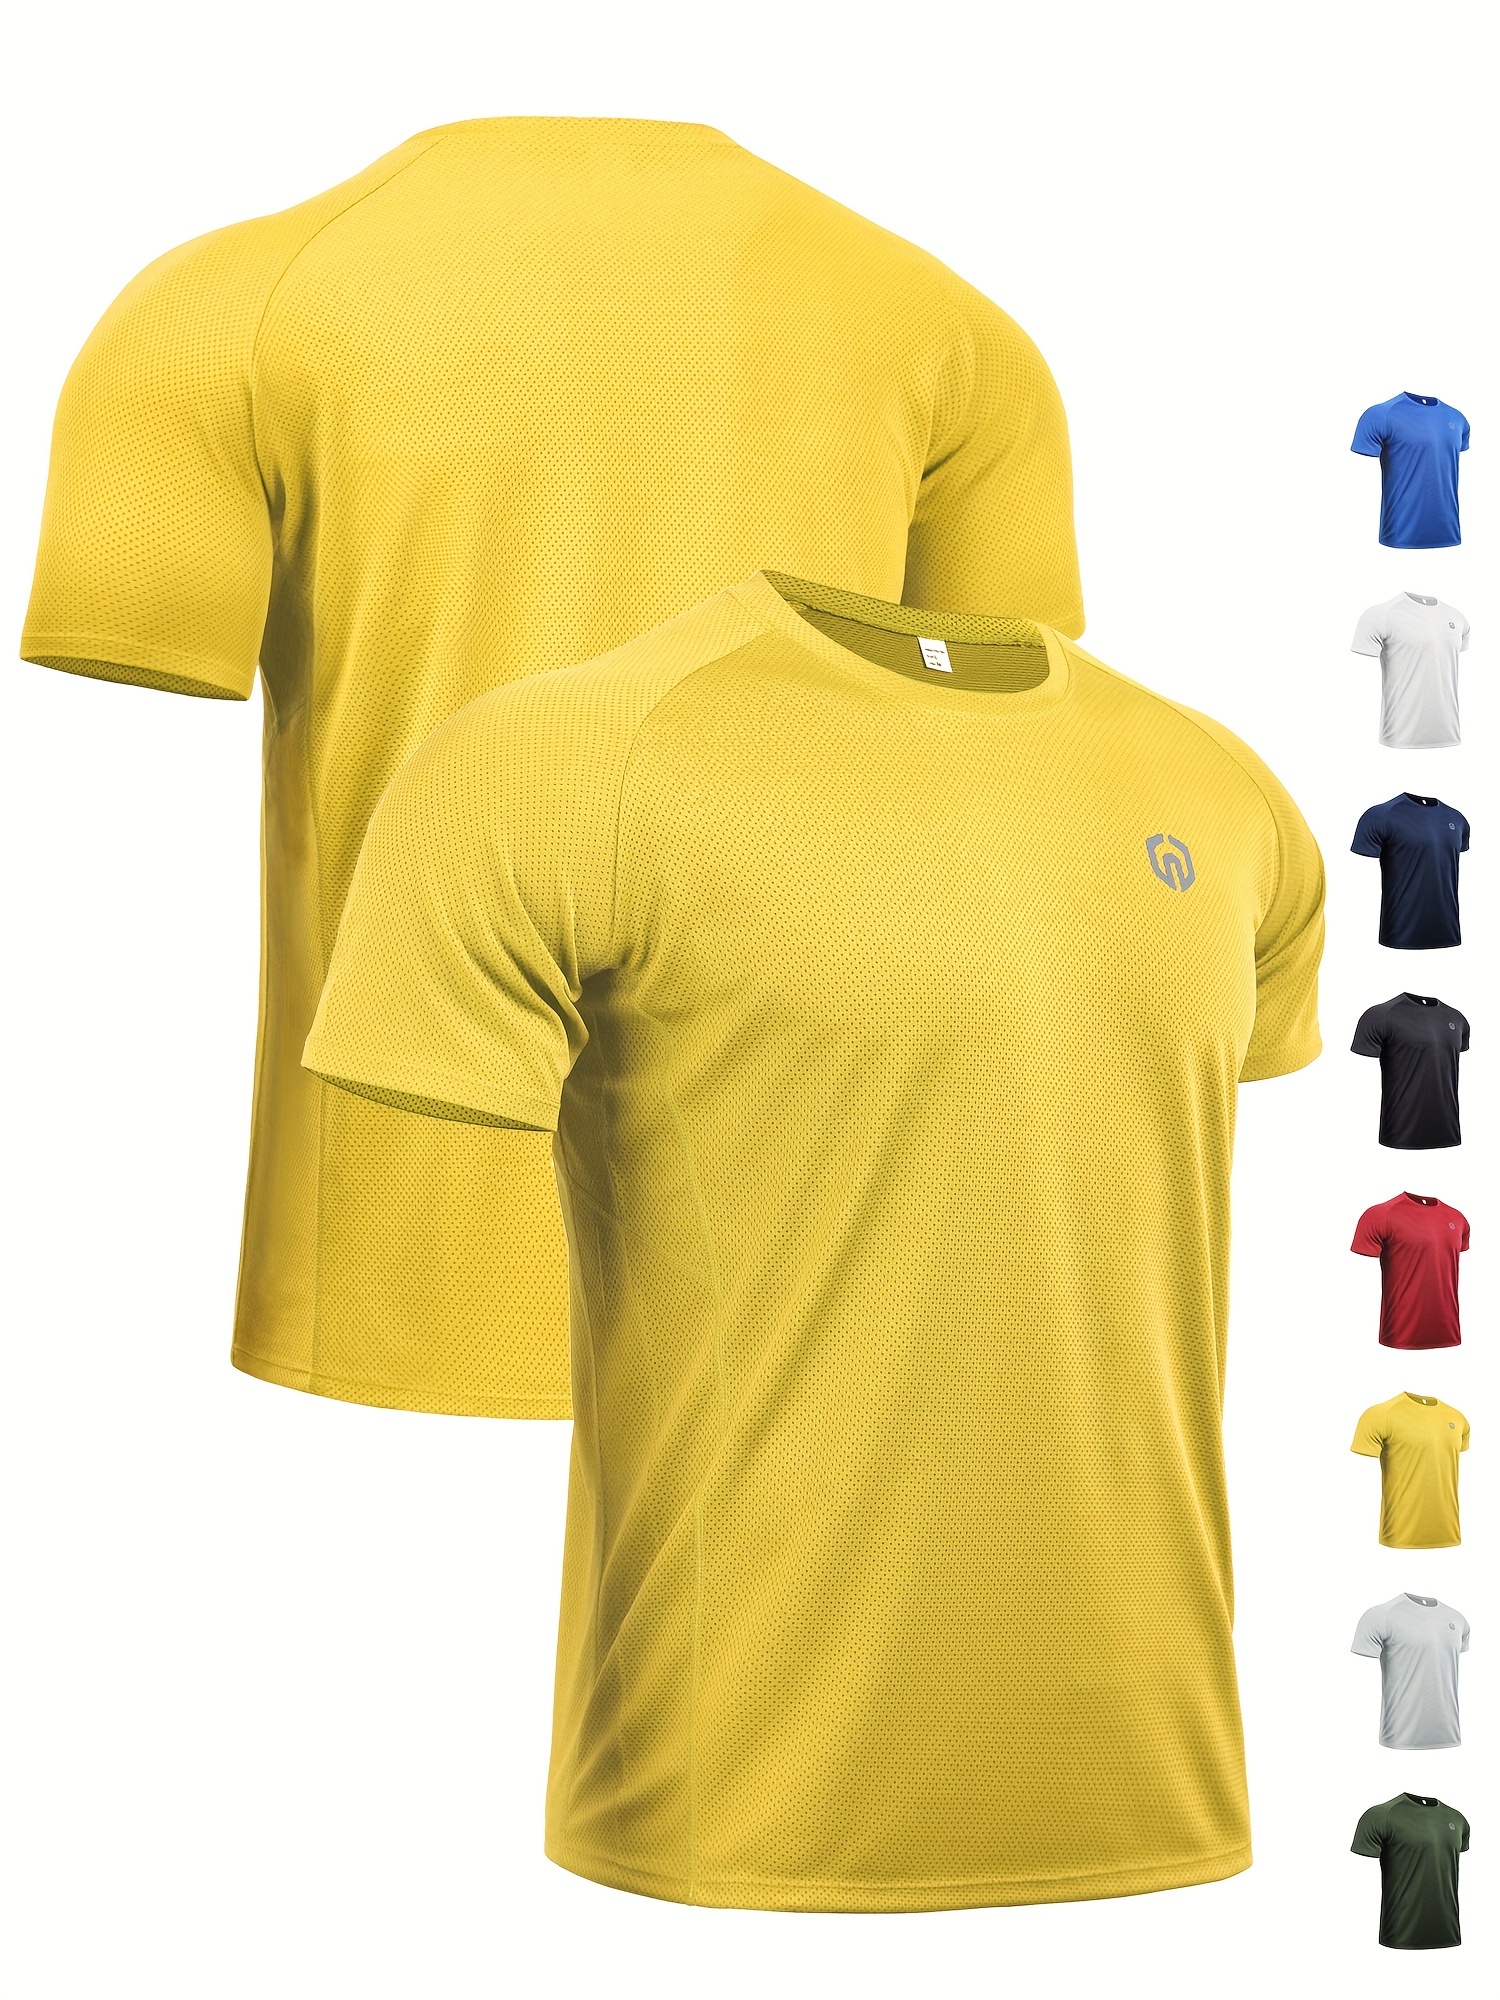 Tek Gear Yellow Athletic Short Sleeve Shirts for Men